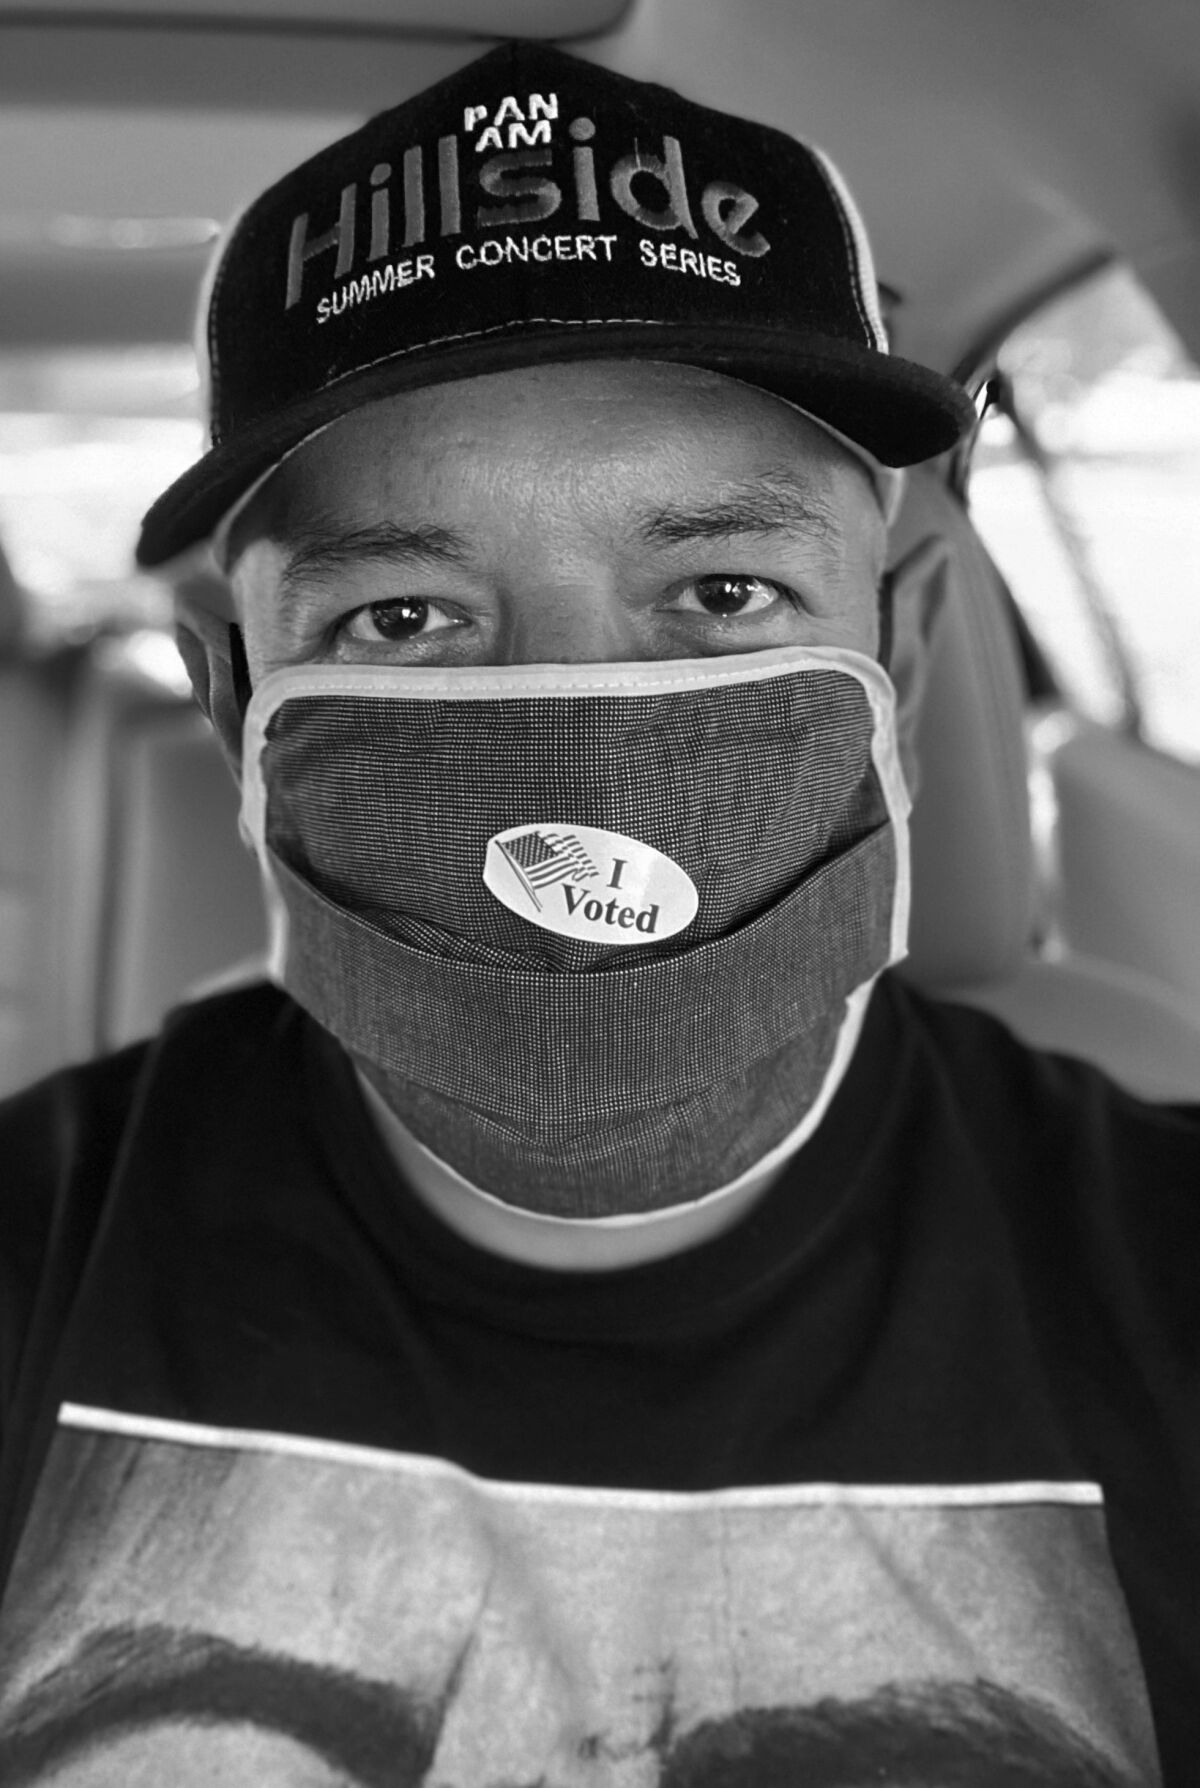 Biden supporter Paul Saldaña wears a mask in this black-and-white selfie taken inside a car.